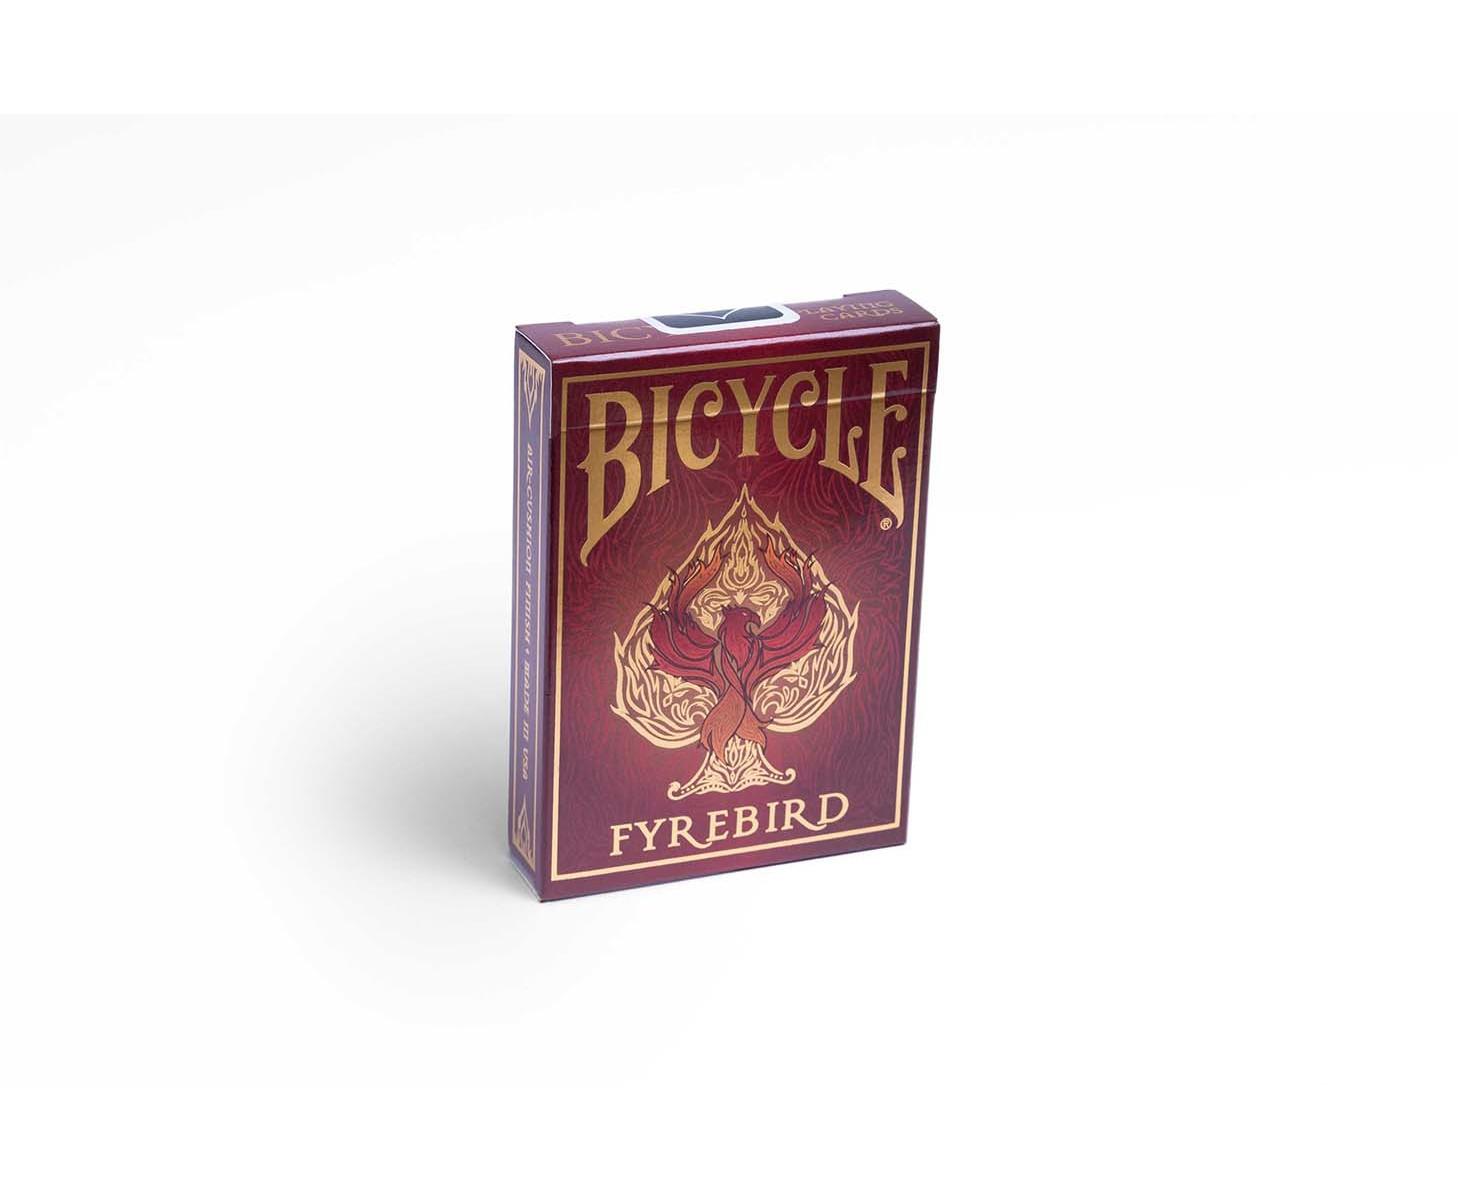 ASS ALTENBURGER Bicycle Kartendeck Kartenspiel - Fyrebird